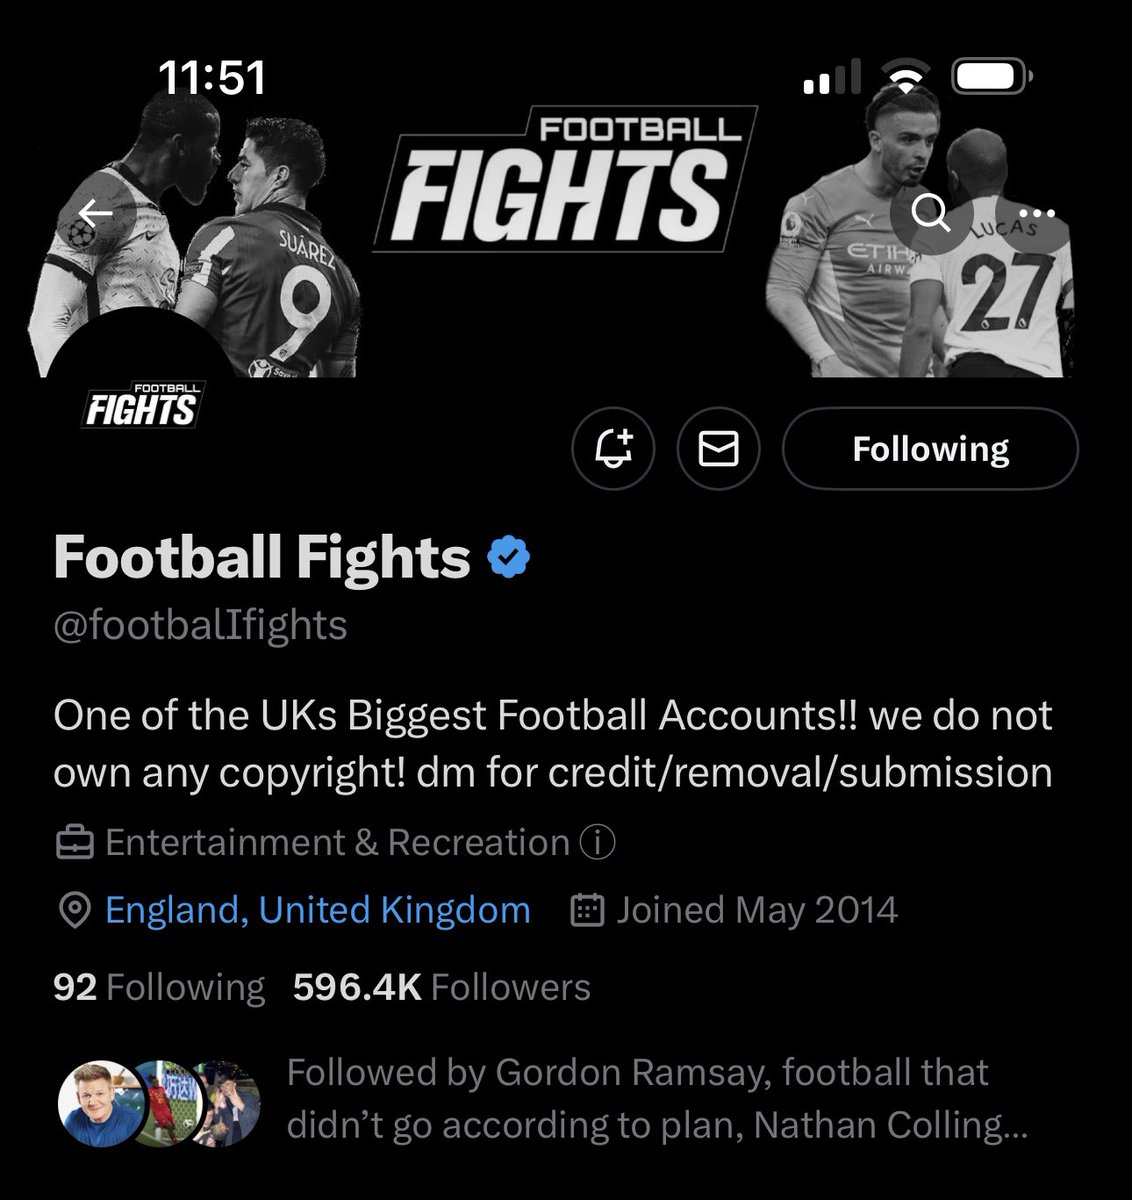 Gordon Ramsay following Football Fights hahaahah. https://t.co/MwIlkIrtHA